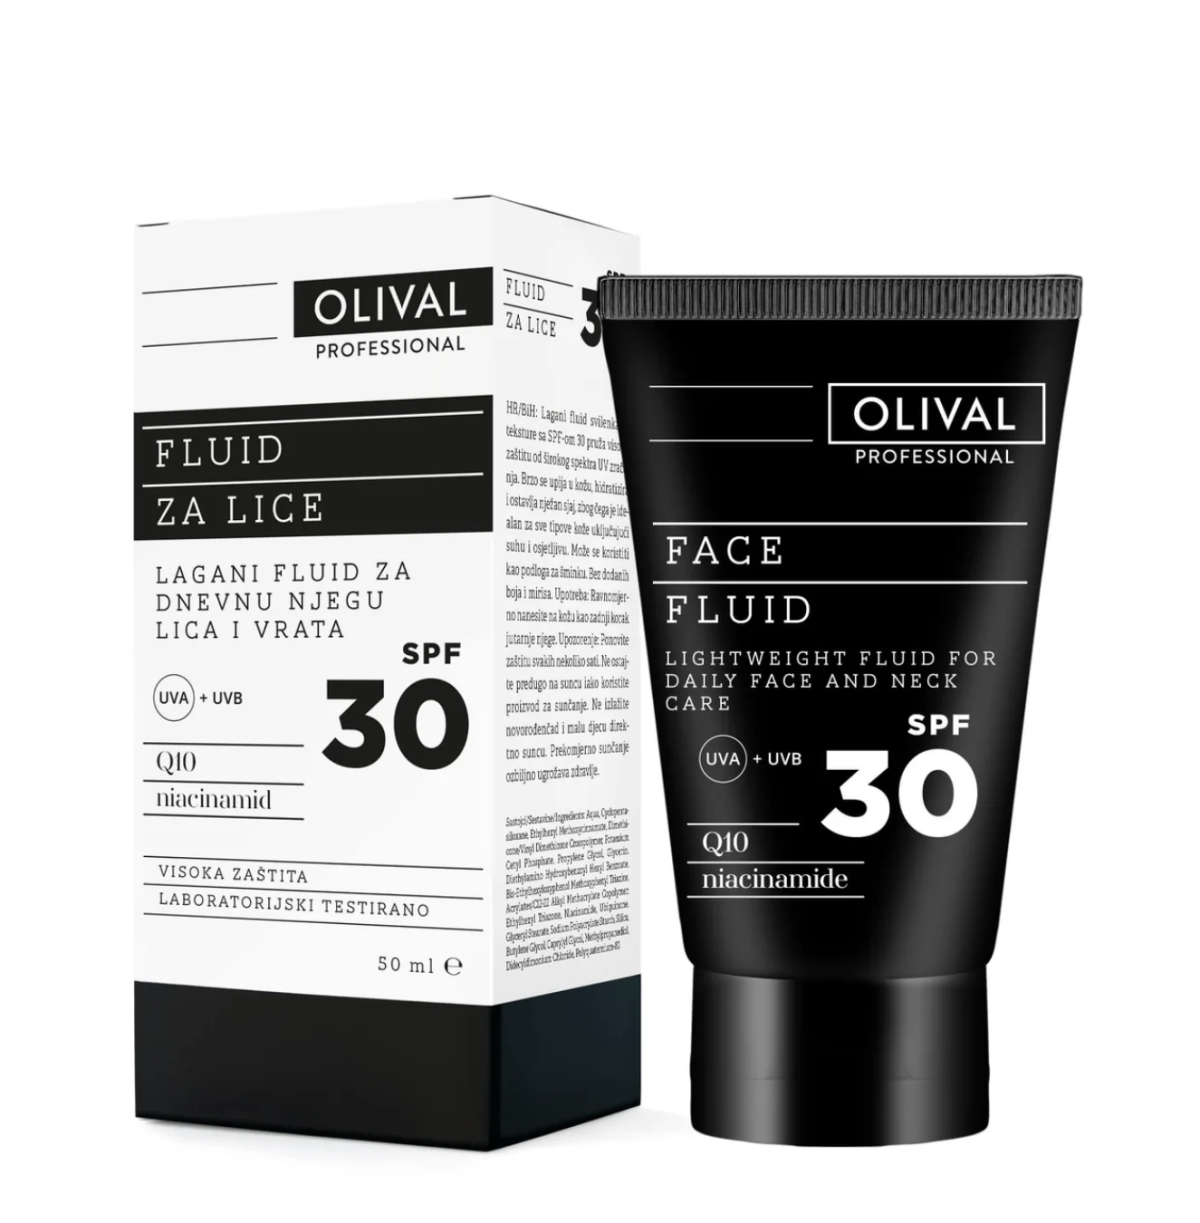 OLIVAL, Professional Face Fluid SPF 30